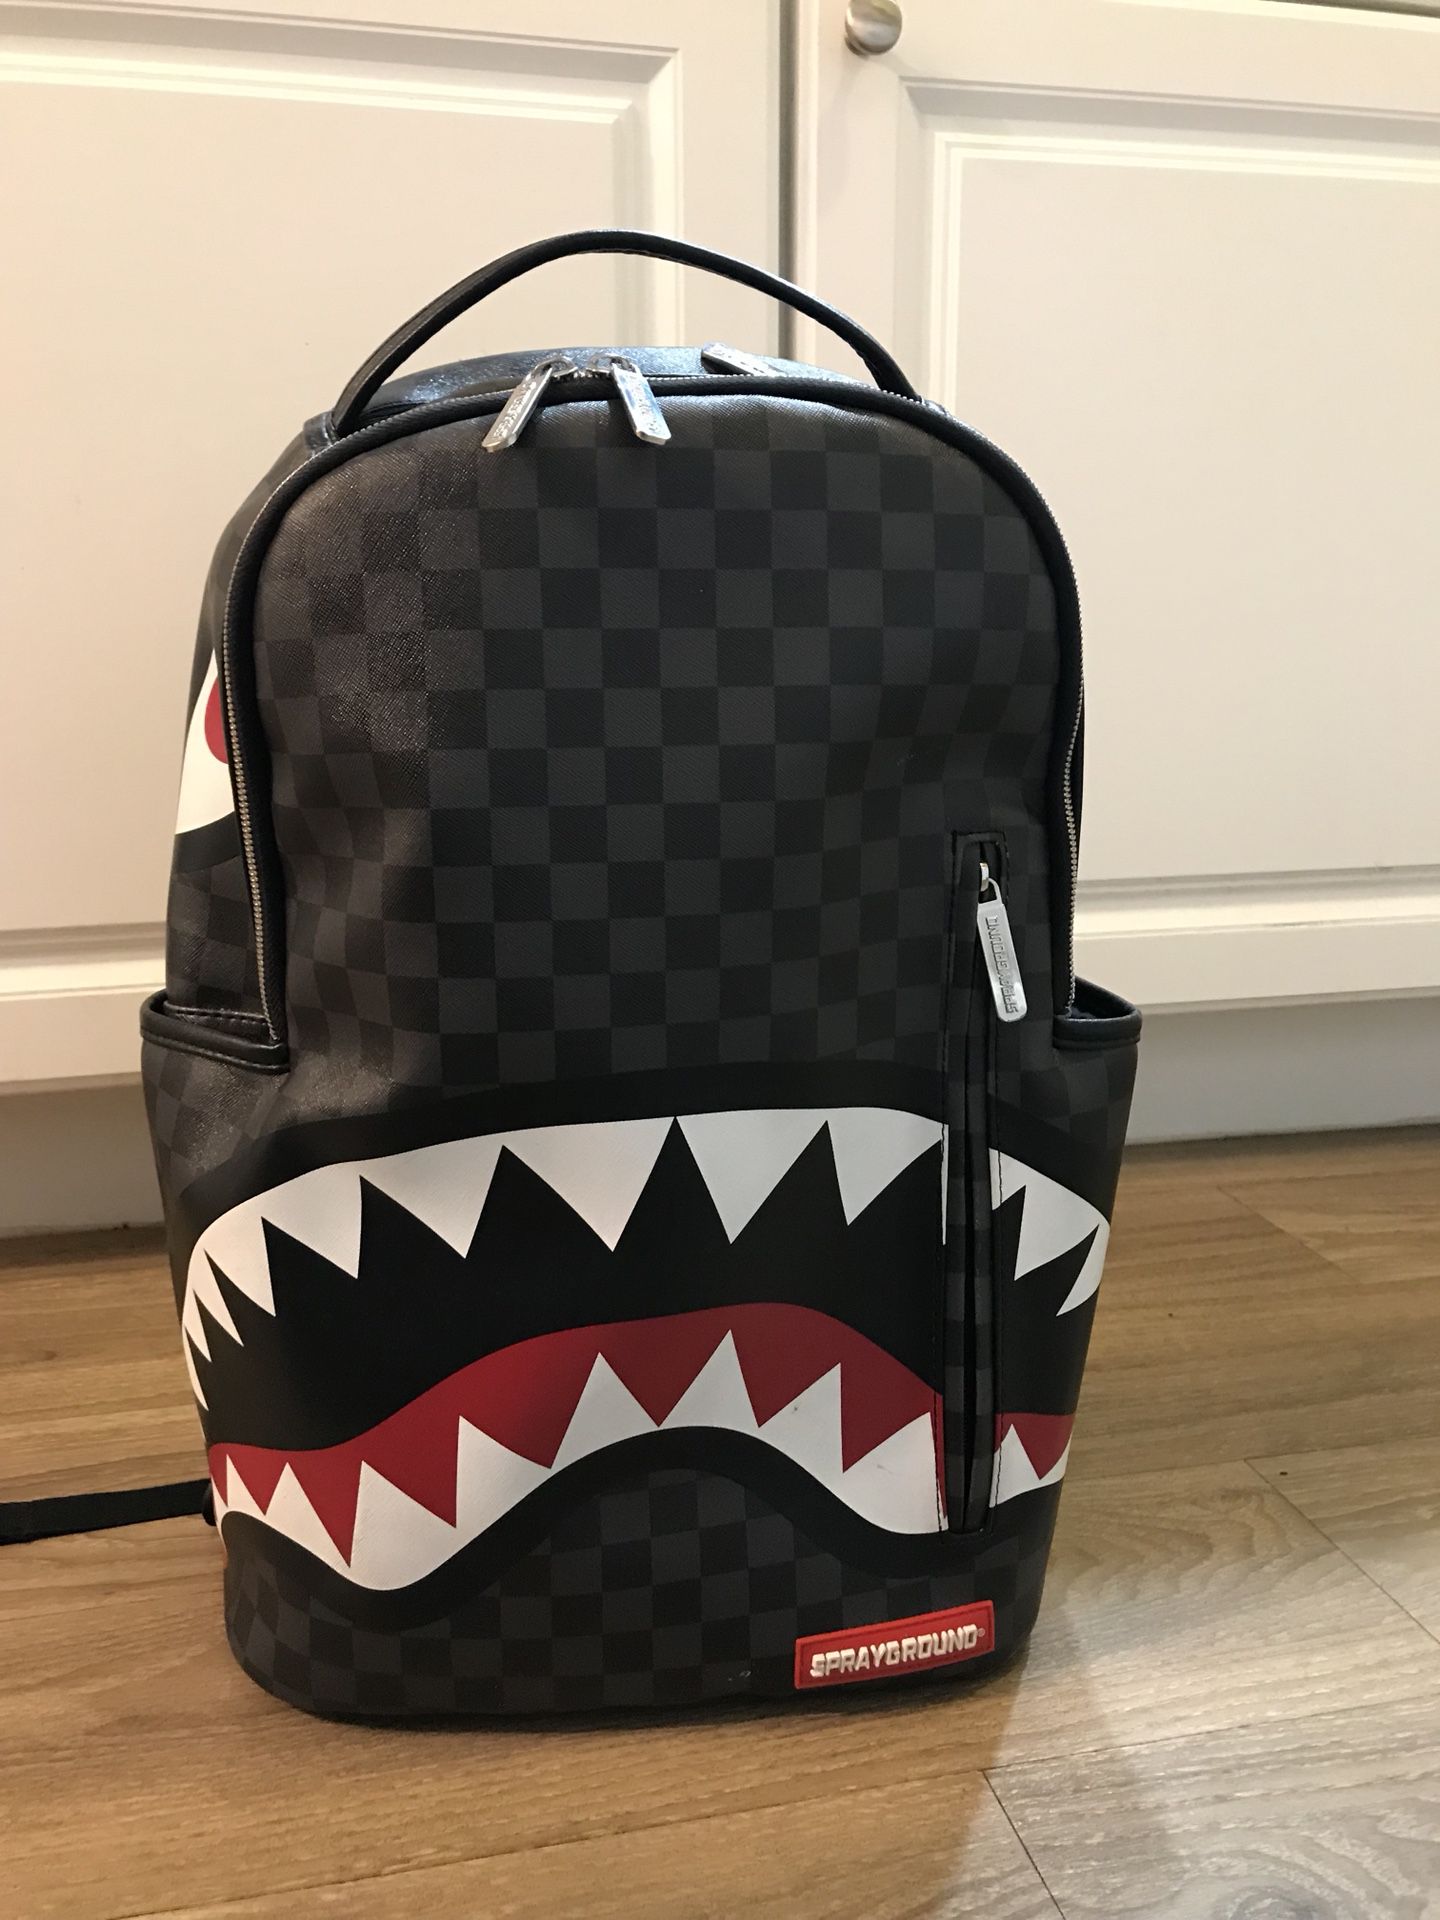 SPRAYGROUND Backpack - Sharks In Paris for Sale in Phoenix, AZ